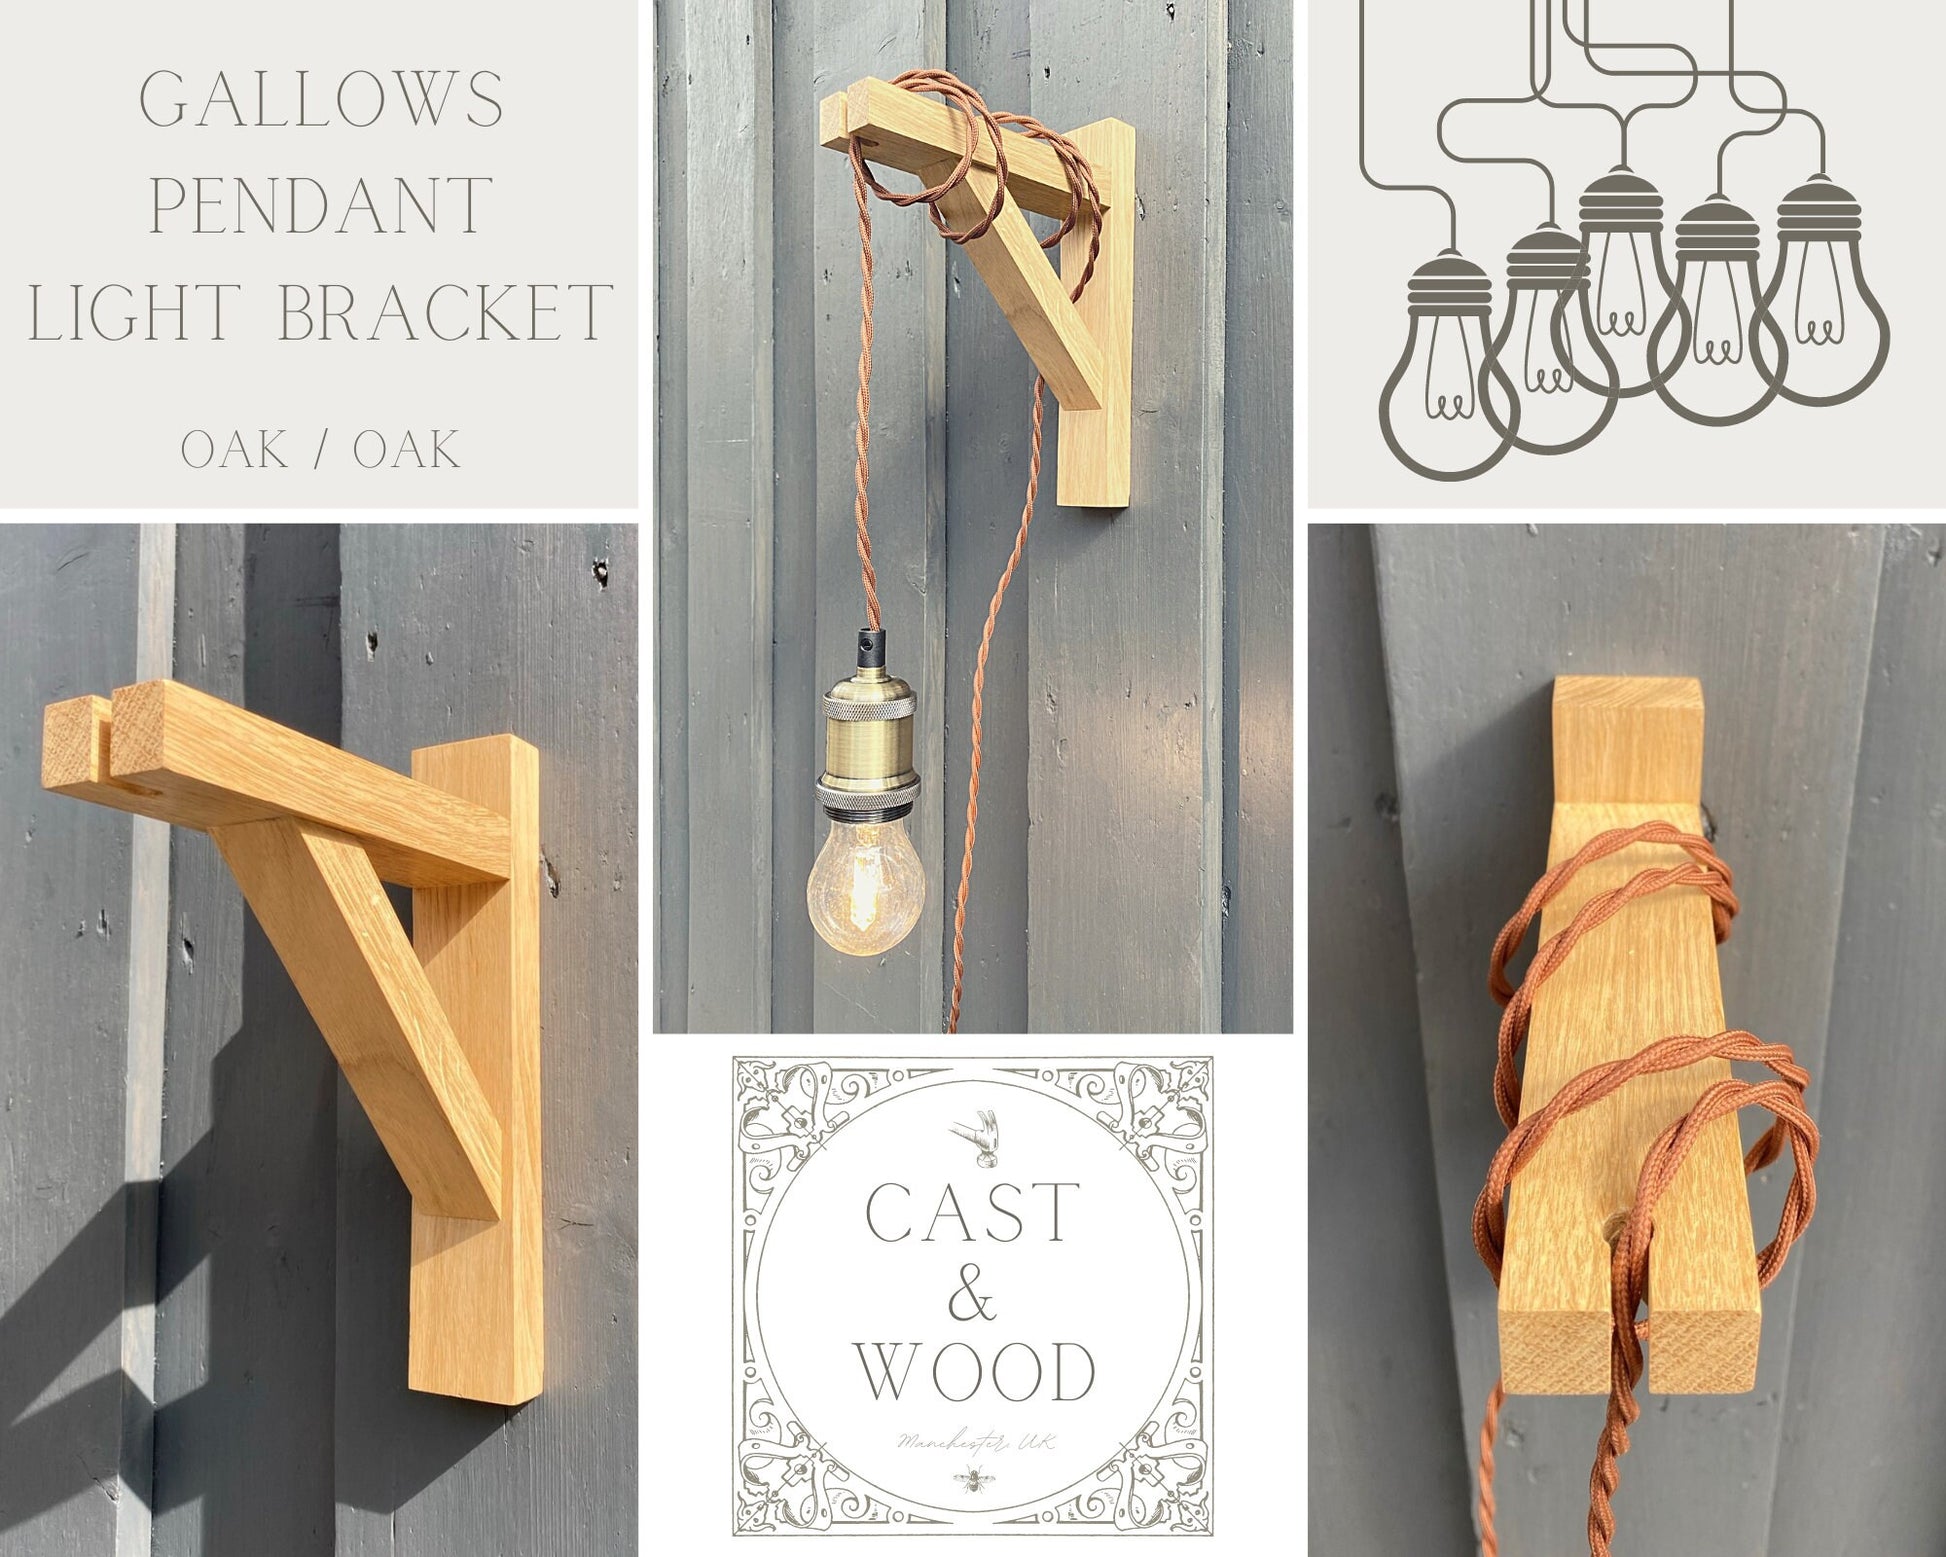 Solid Oak Gallows Pendant Wall Light Bracket freeshipping - Cast & Wood